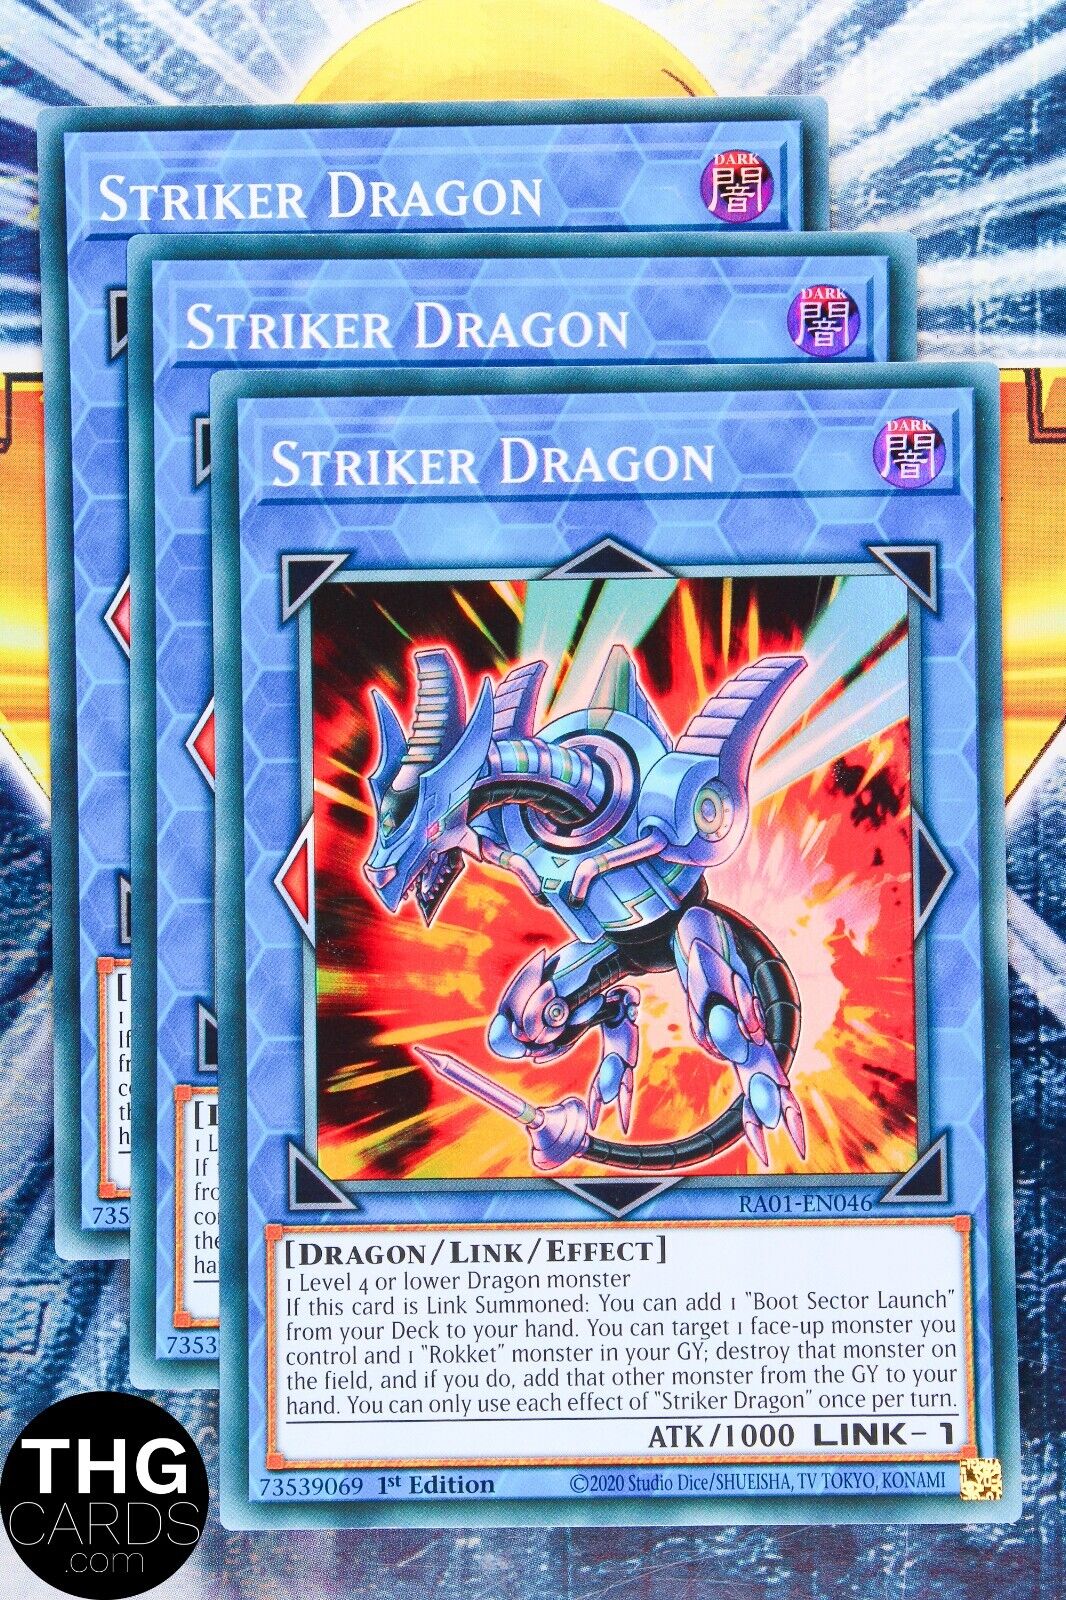 Striker Dragon RA01-EN046 Super Rare Yugioh Playset